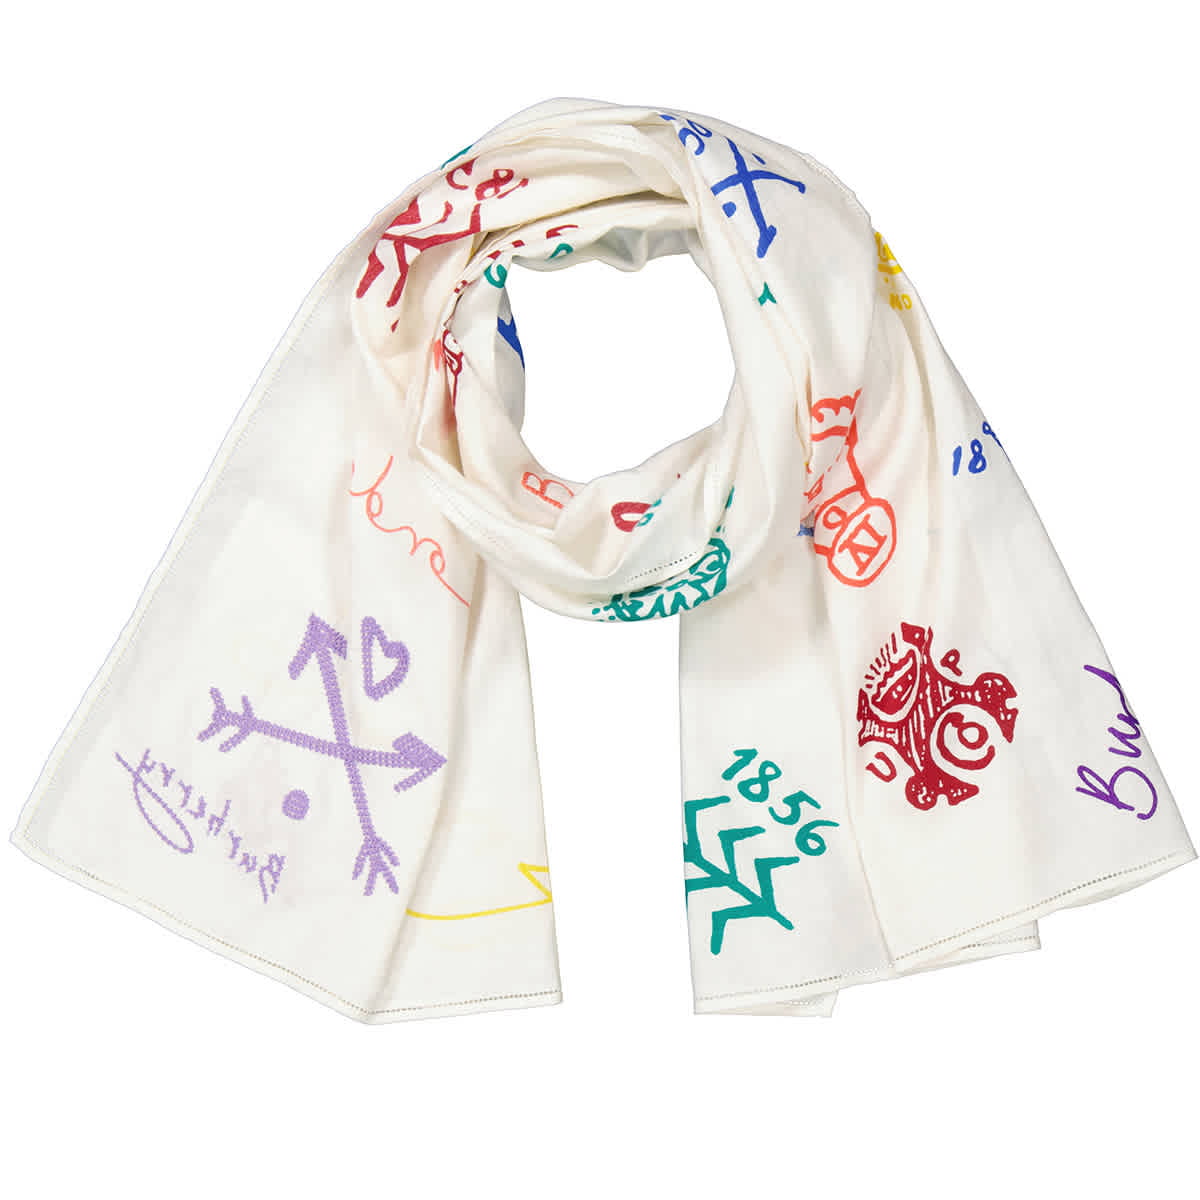 Black Daisy Metallic Foil Print Scarf scarves shawl throw wrap present gift bag